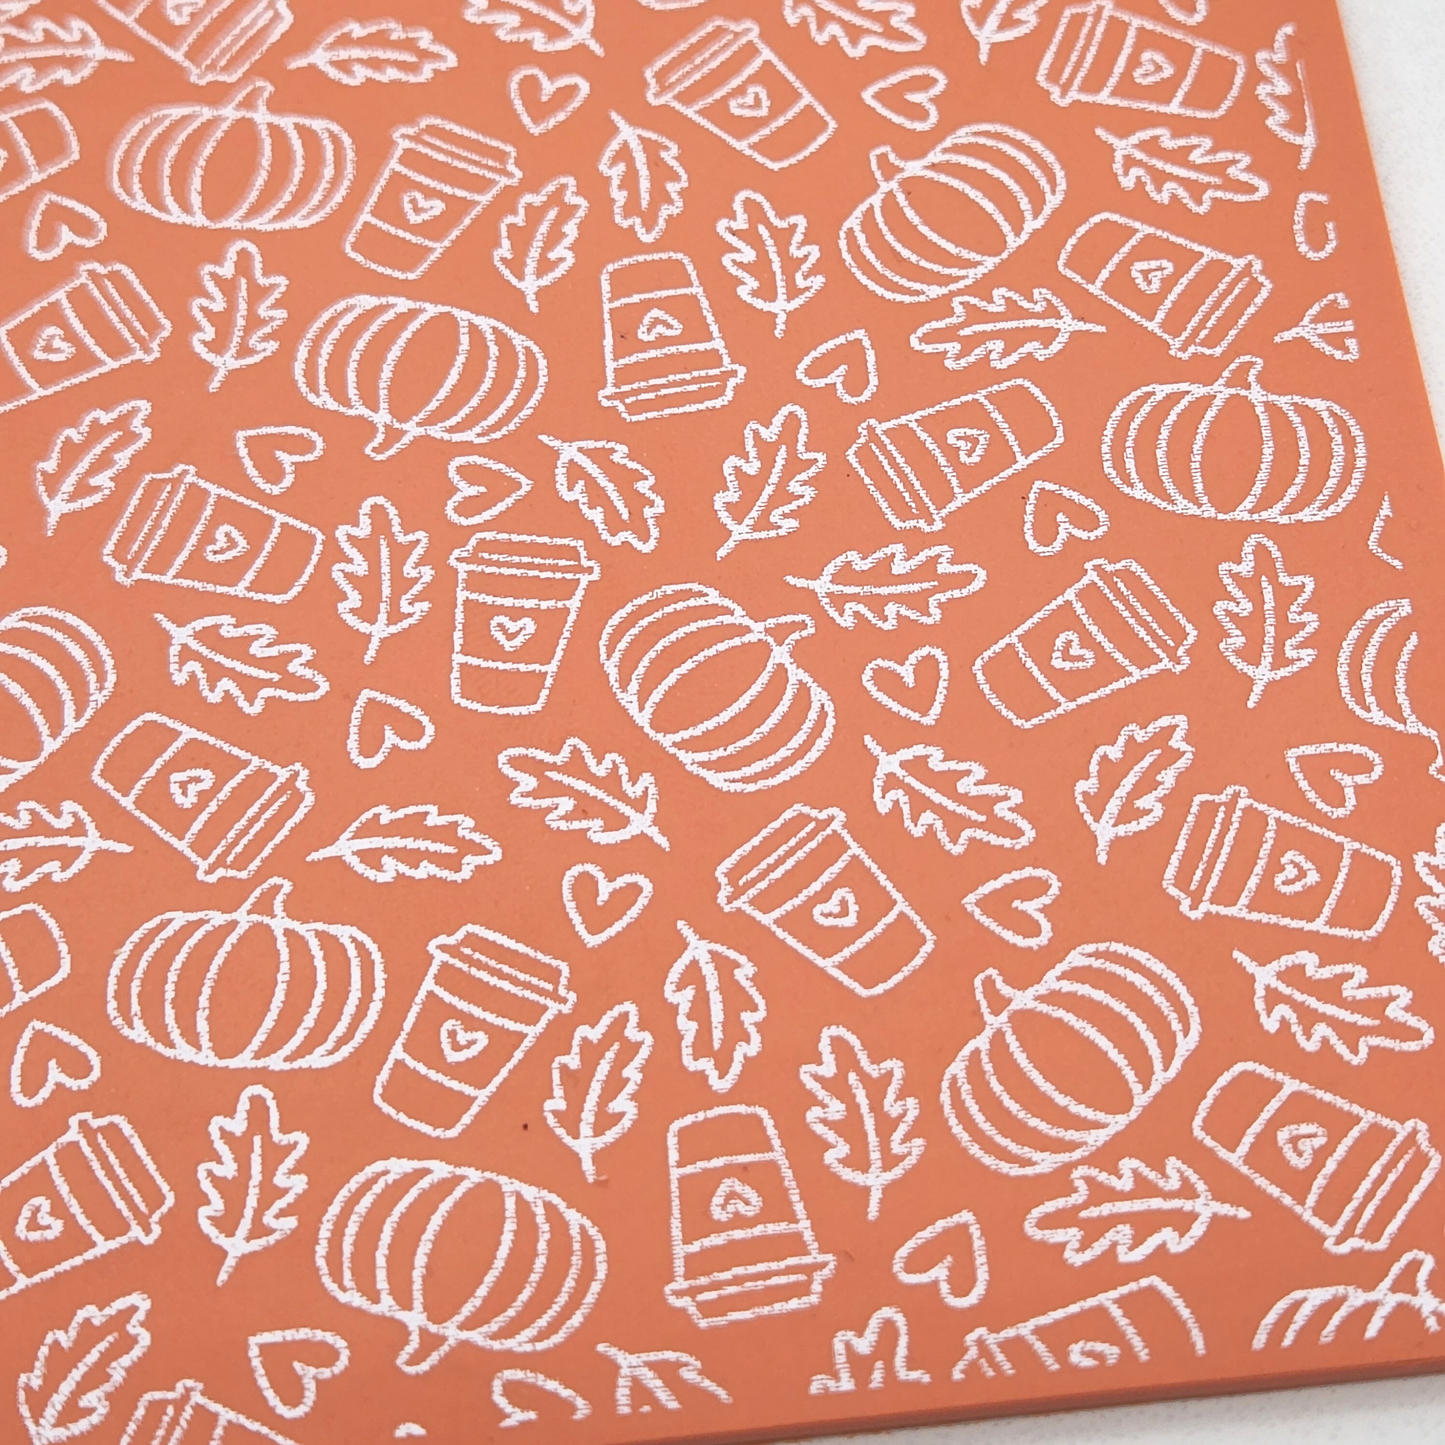 Pumpkin Spice Latte Design Silk Screen Details